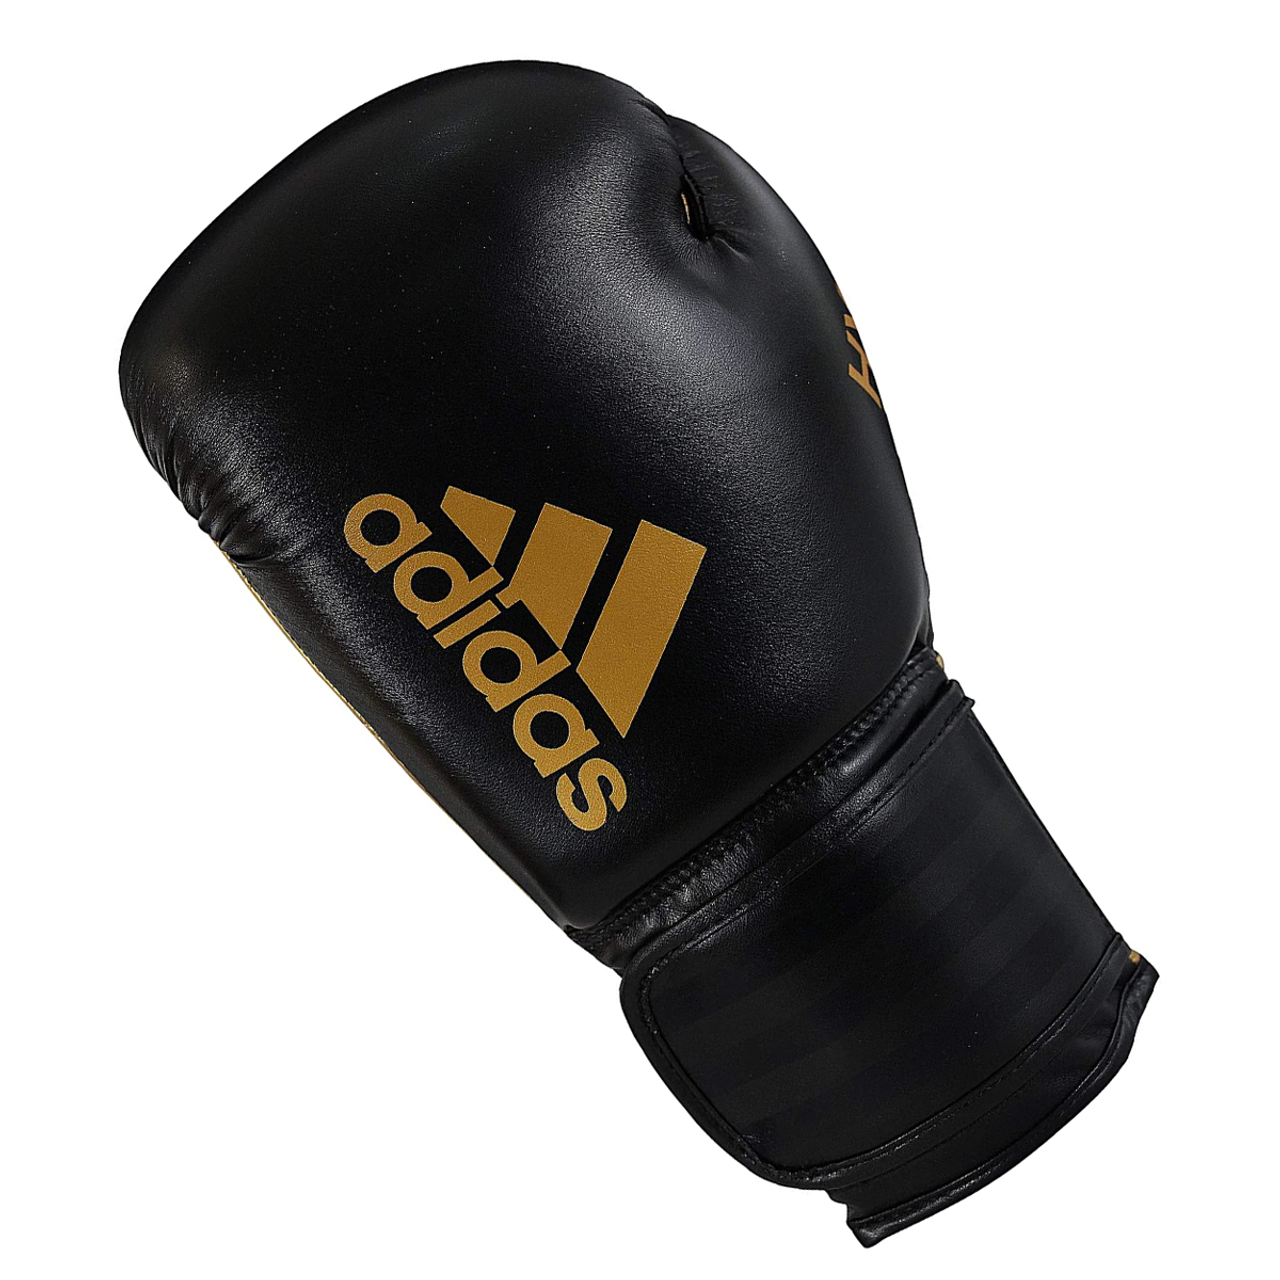 Adidas Hybrid - Black, Boxing 50 Gold Gloves